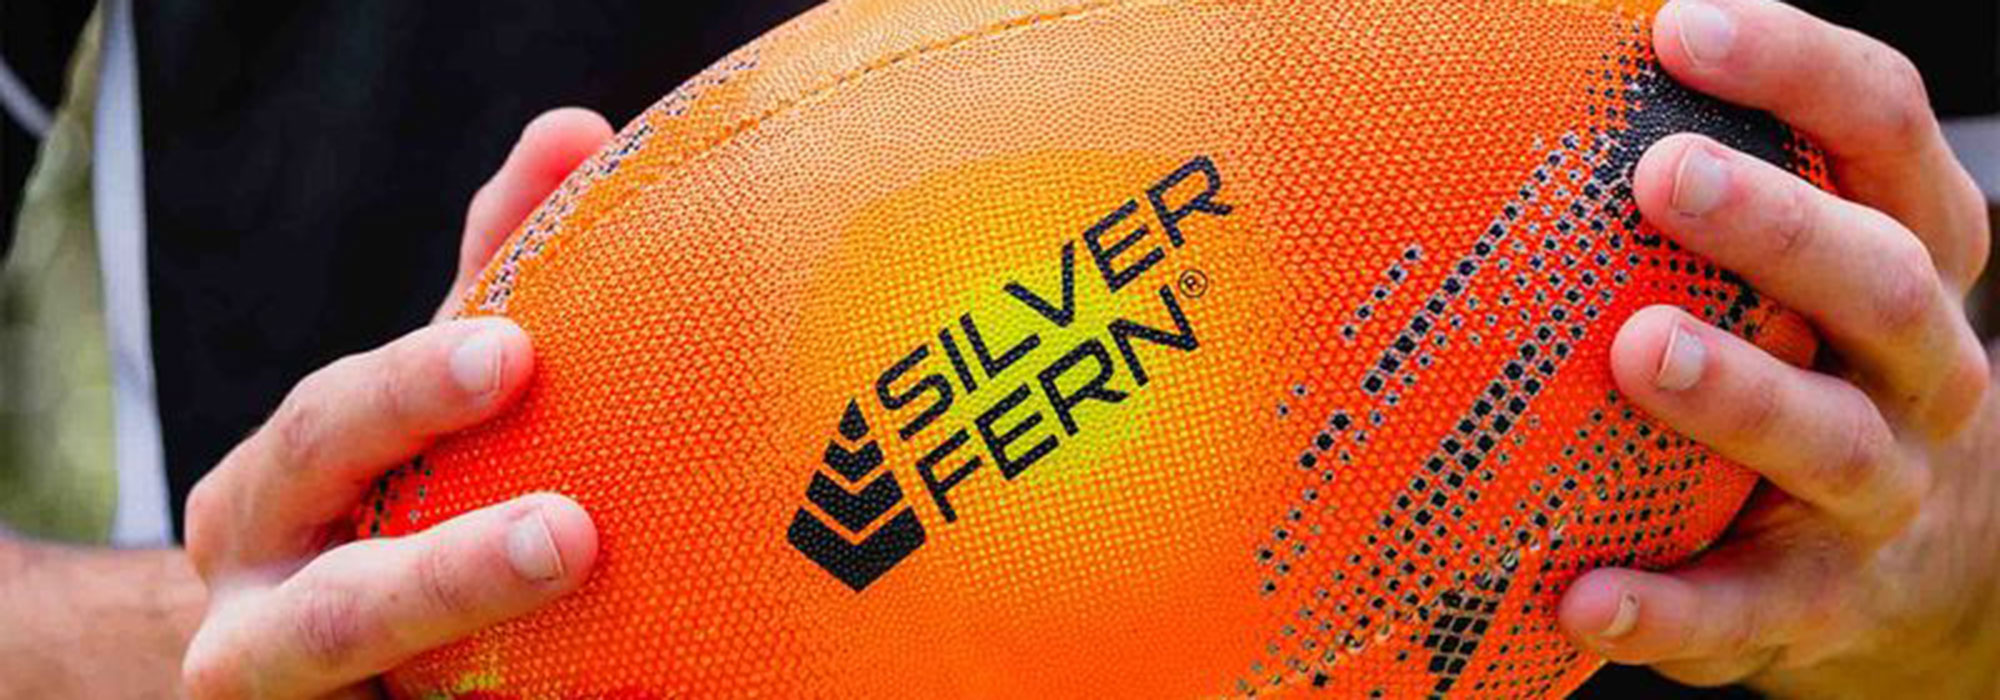 Silver-Ferns-Rugby-Ball-Banner-2.jpg